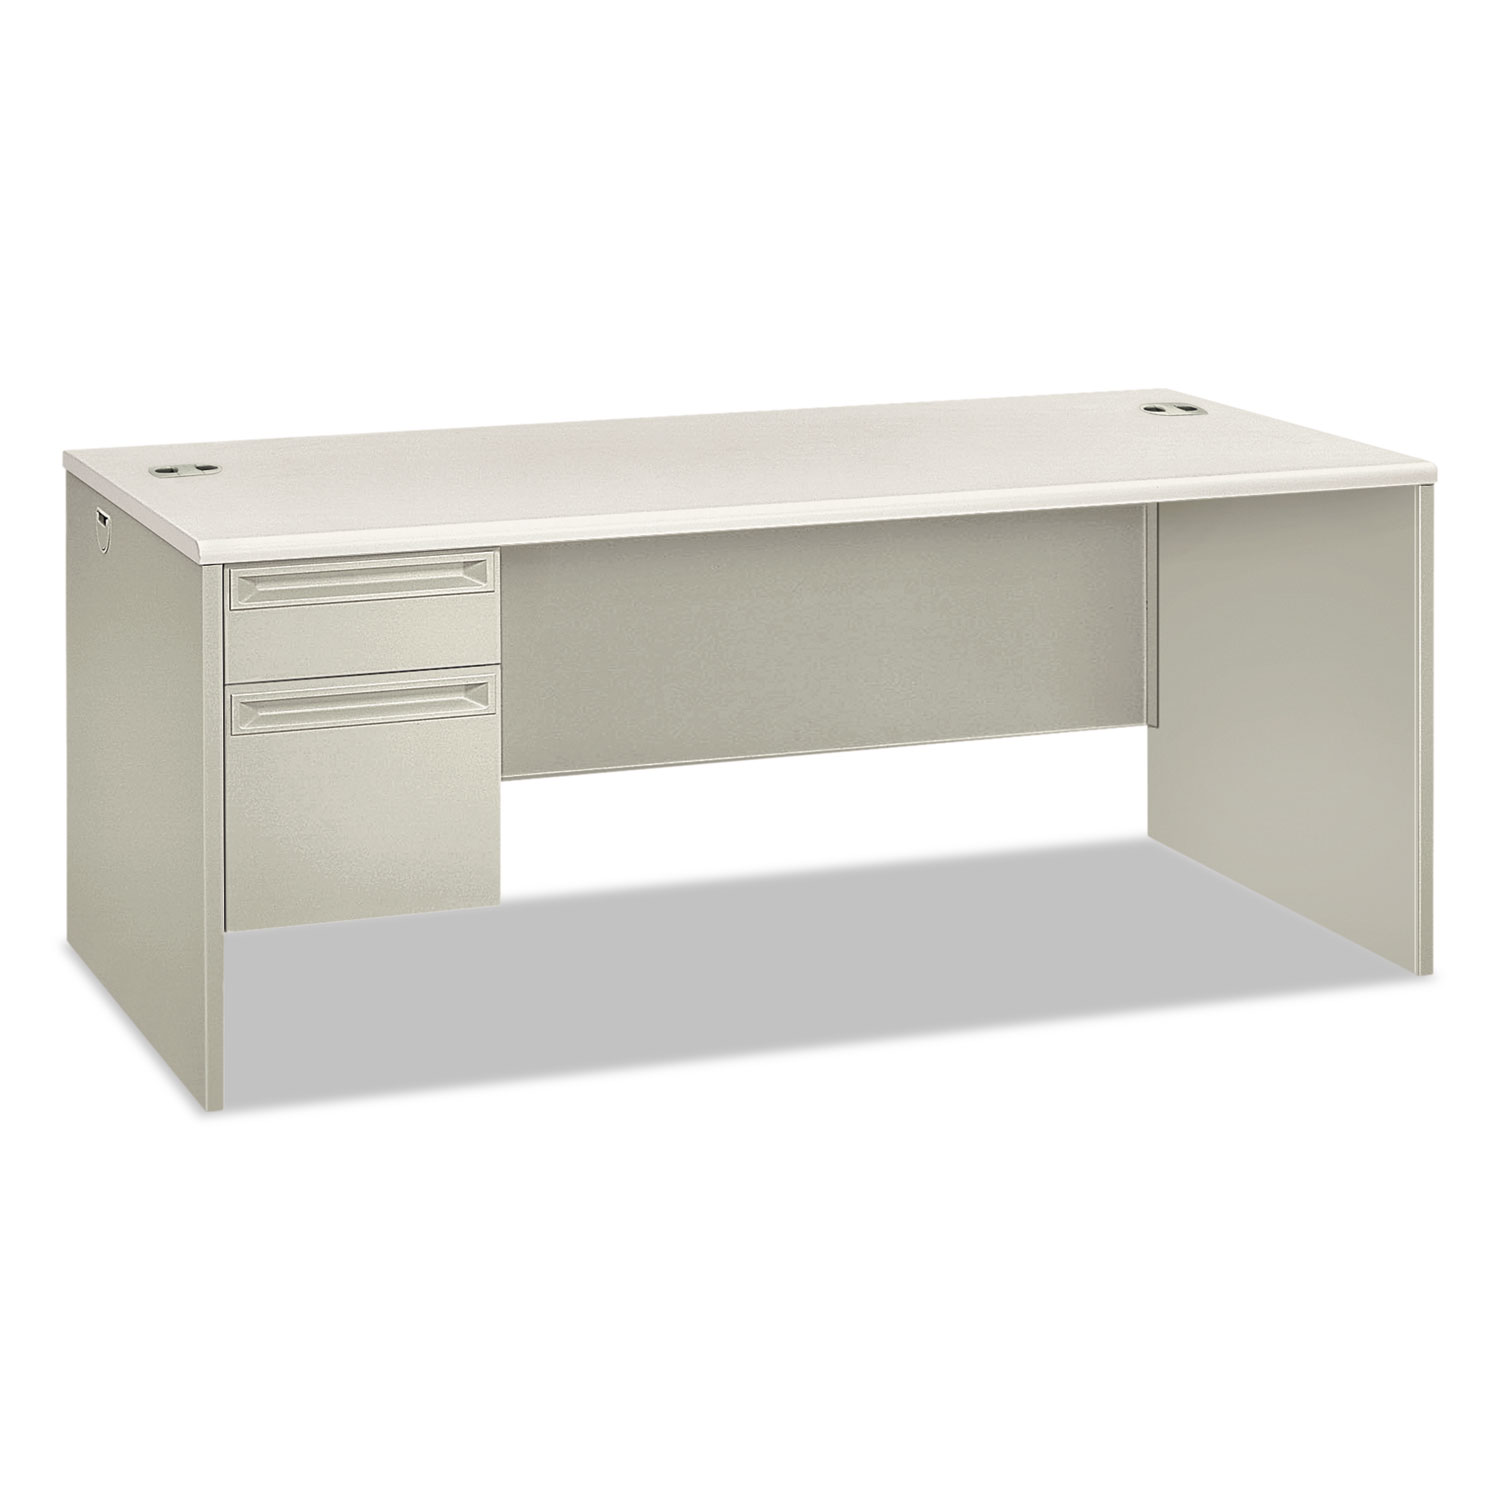  HON H38294L.B9.Q 38000 Series Single Pedestal Desk, Left, 72w x 36d x 30h, Silver Mesh/Light Gray (HON38294LB9Q) 